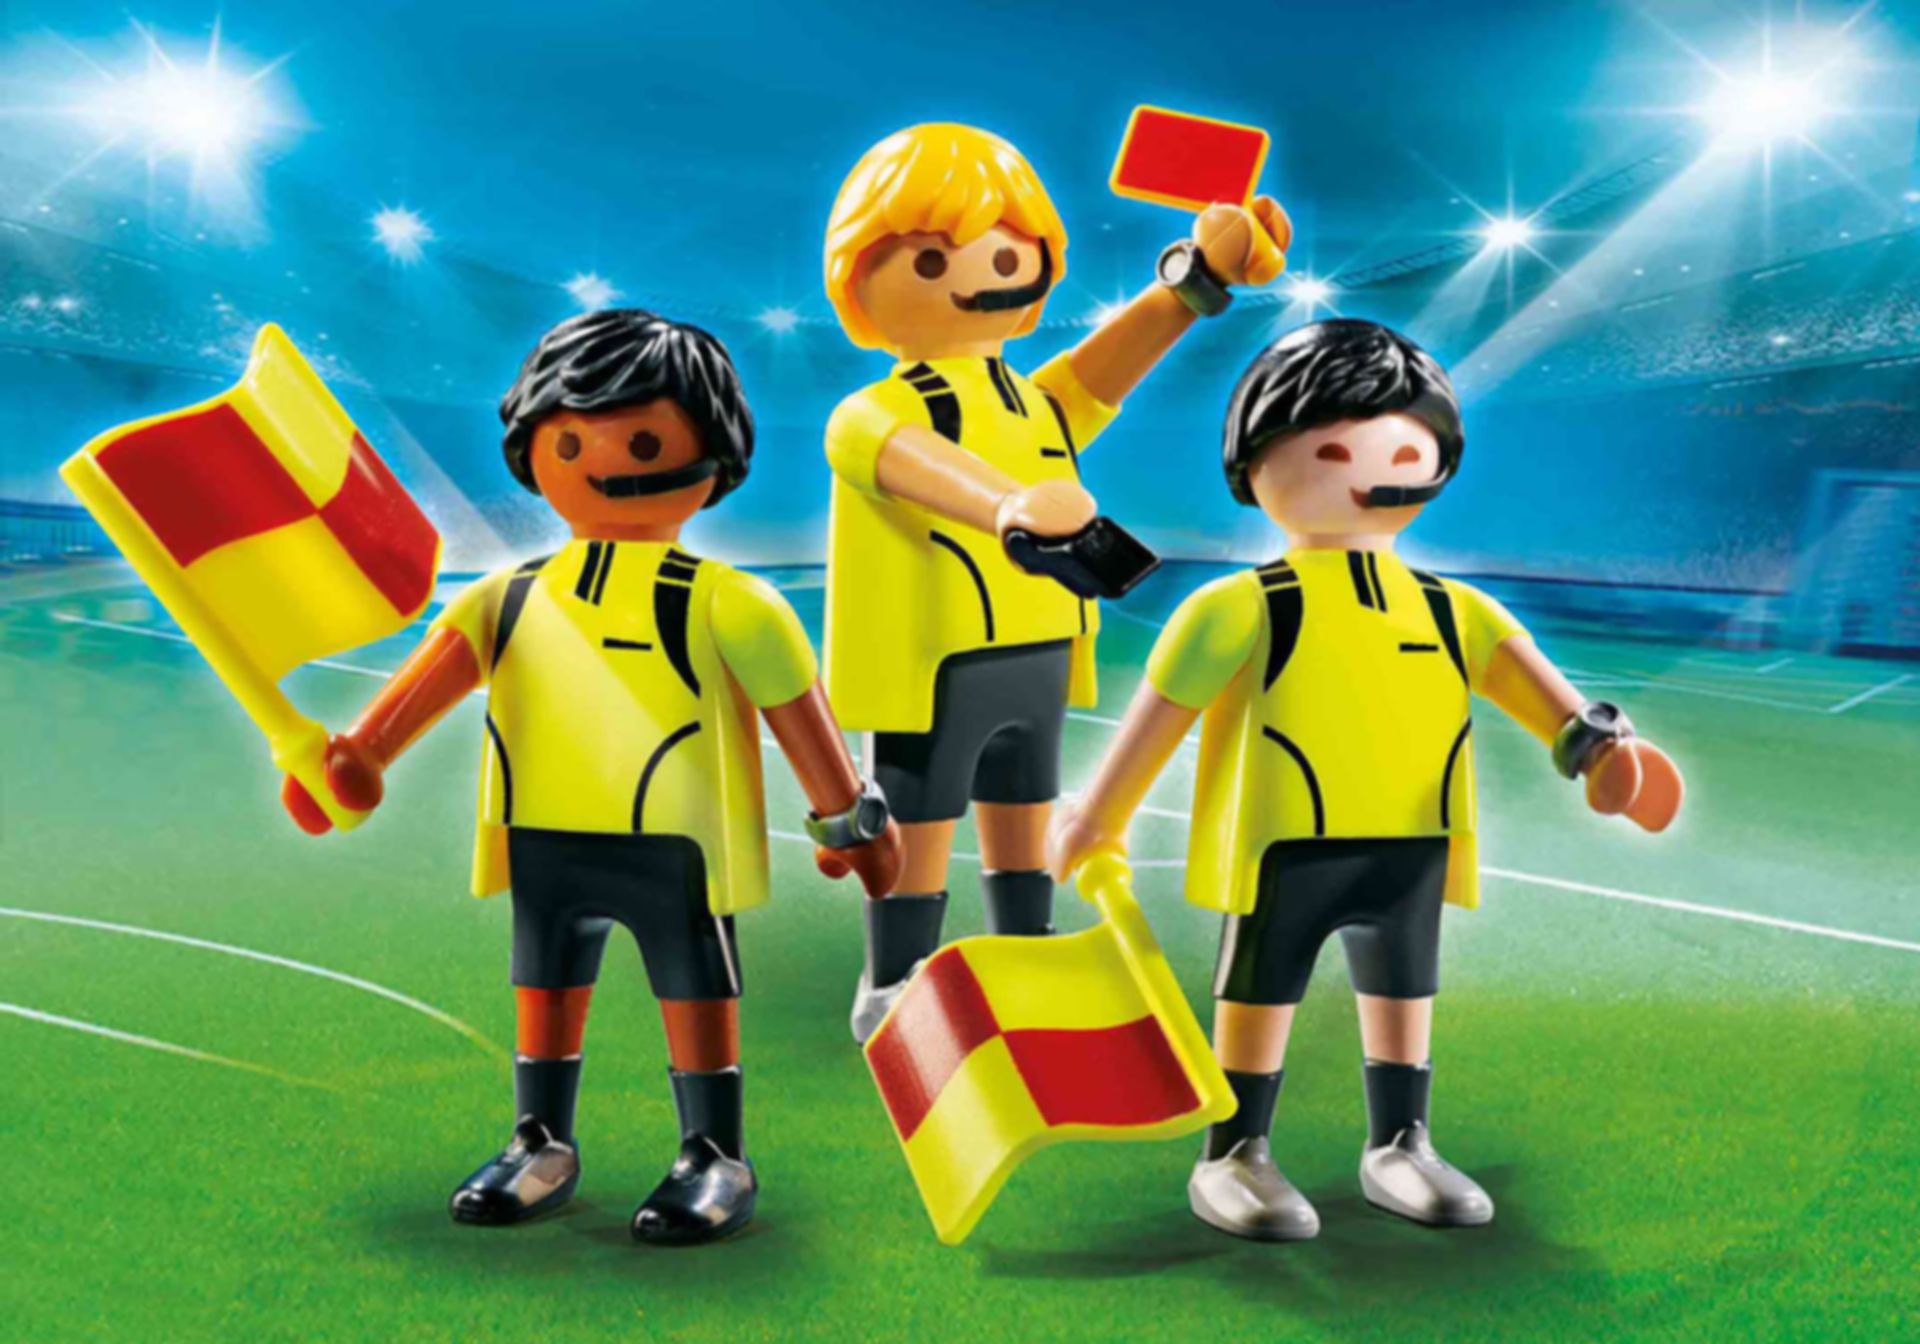 Playmobil® Sports & Action Arbitrators